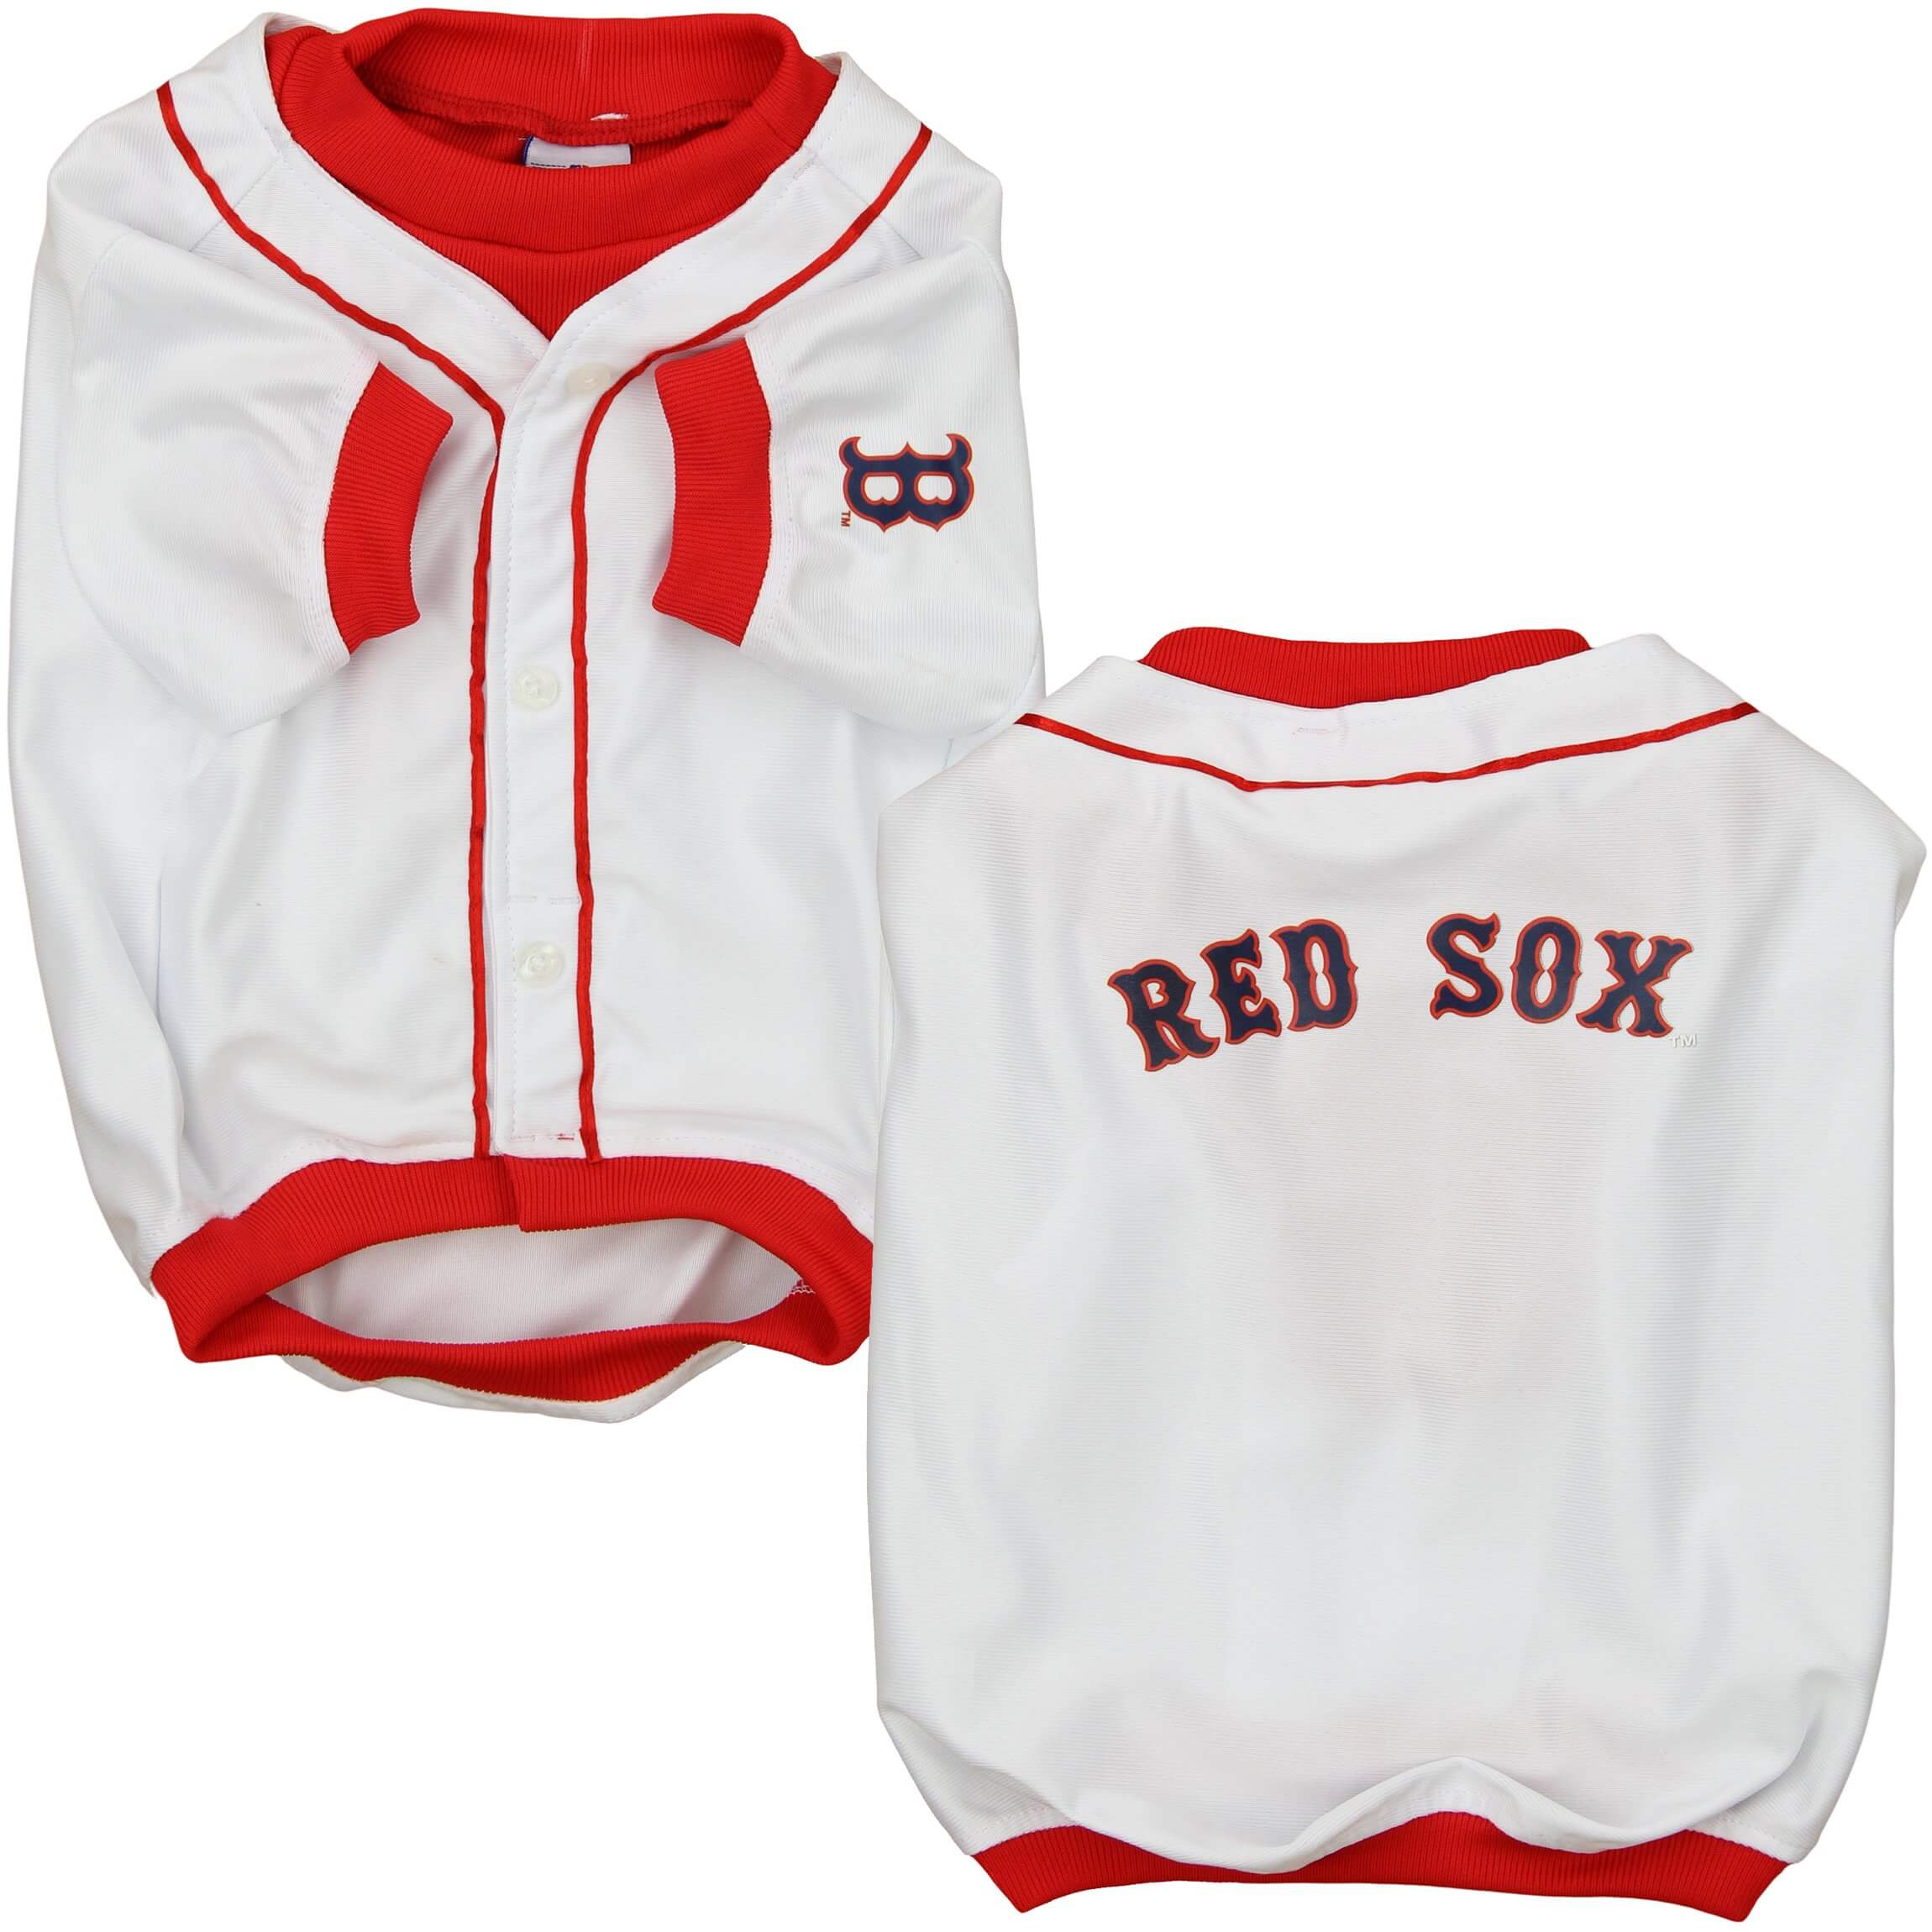 SportyK9 Boston Red Sox Alternate Style Red Jersey - Medium